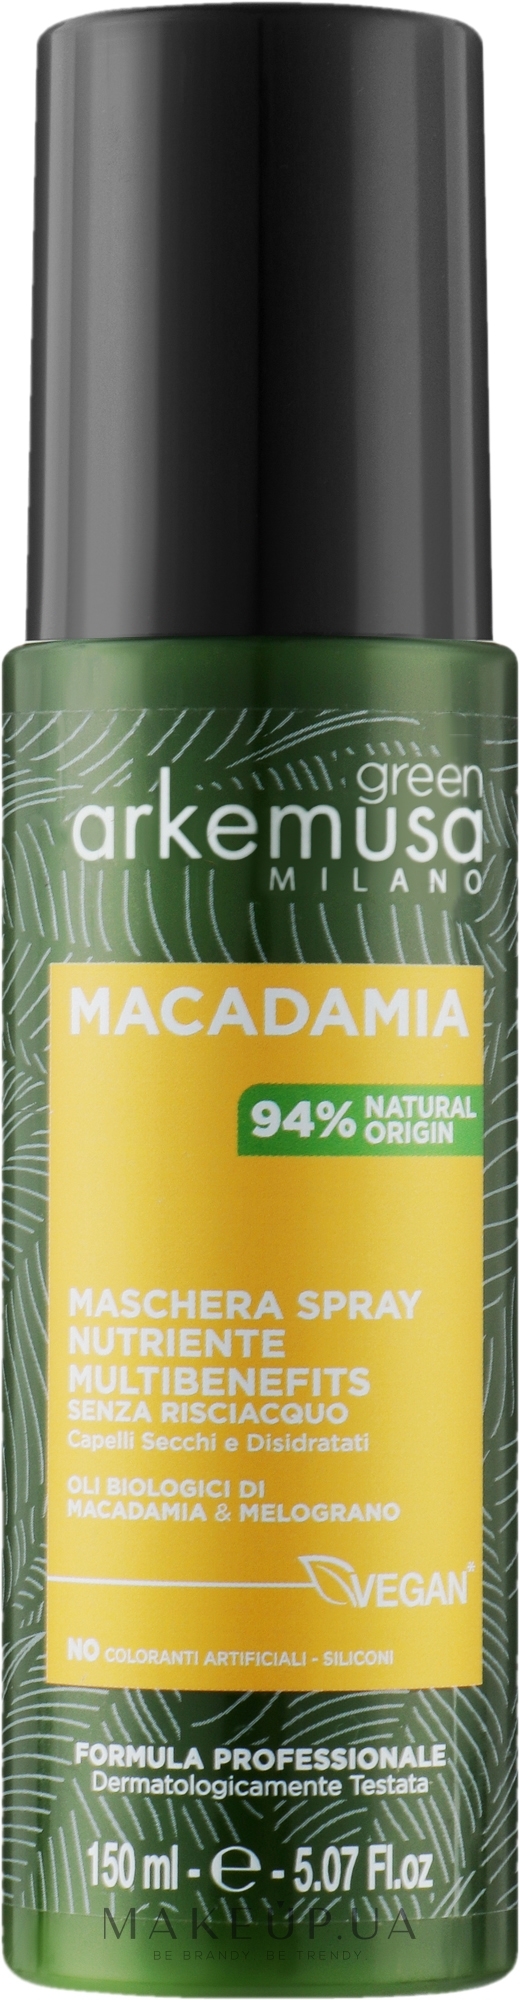 Питательная маска-спрей для сухих волос с макадамией - Arkemusa Green Macadamia Hair Mask Spray — фото 150ml